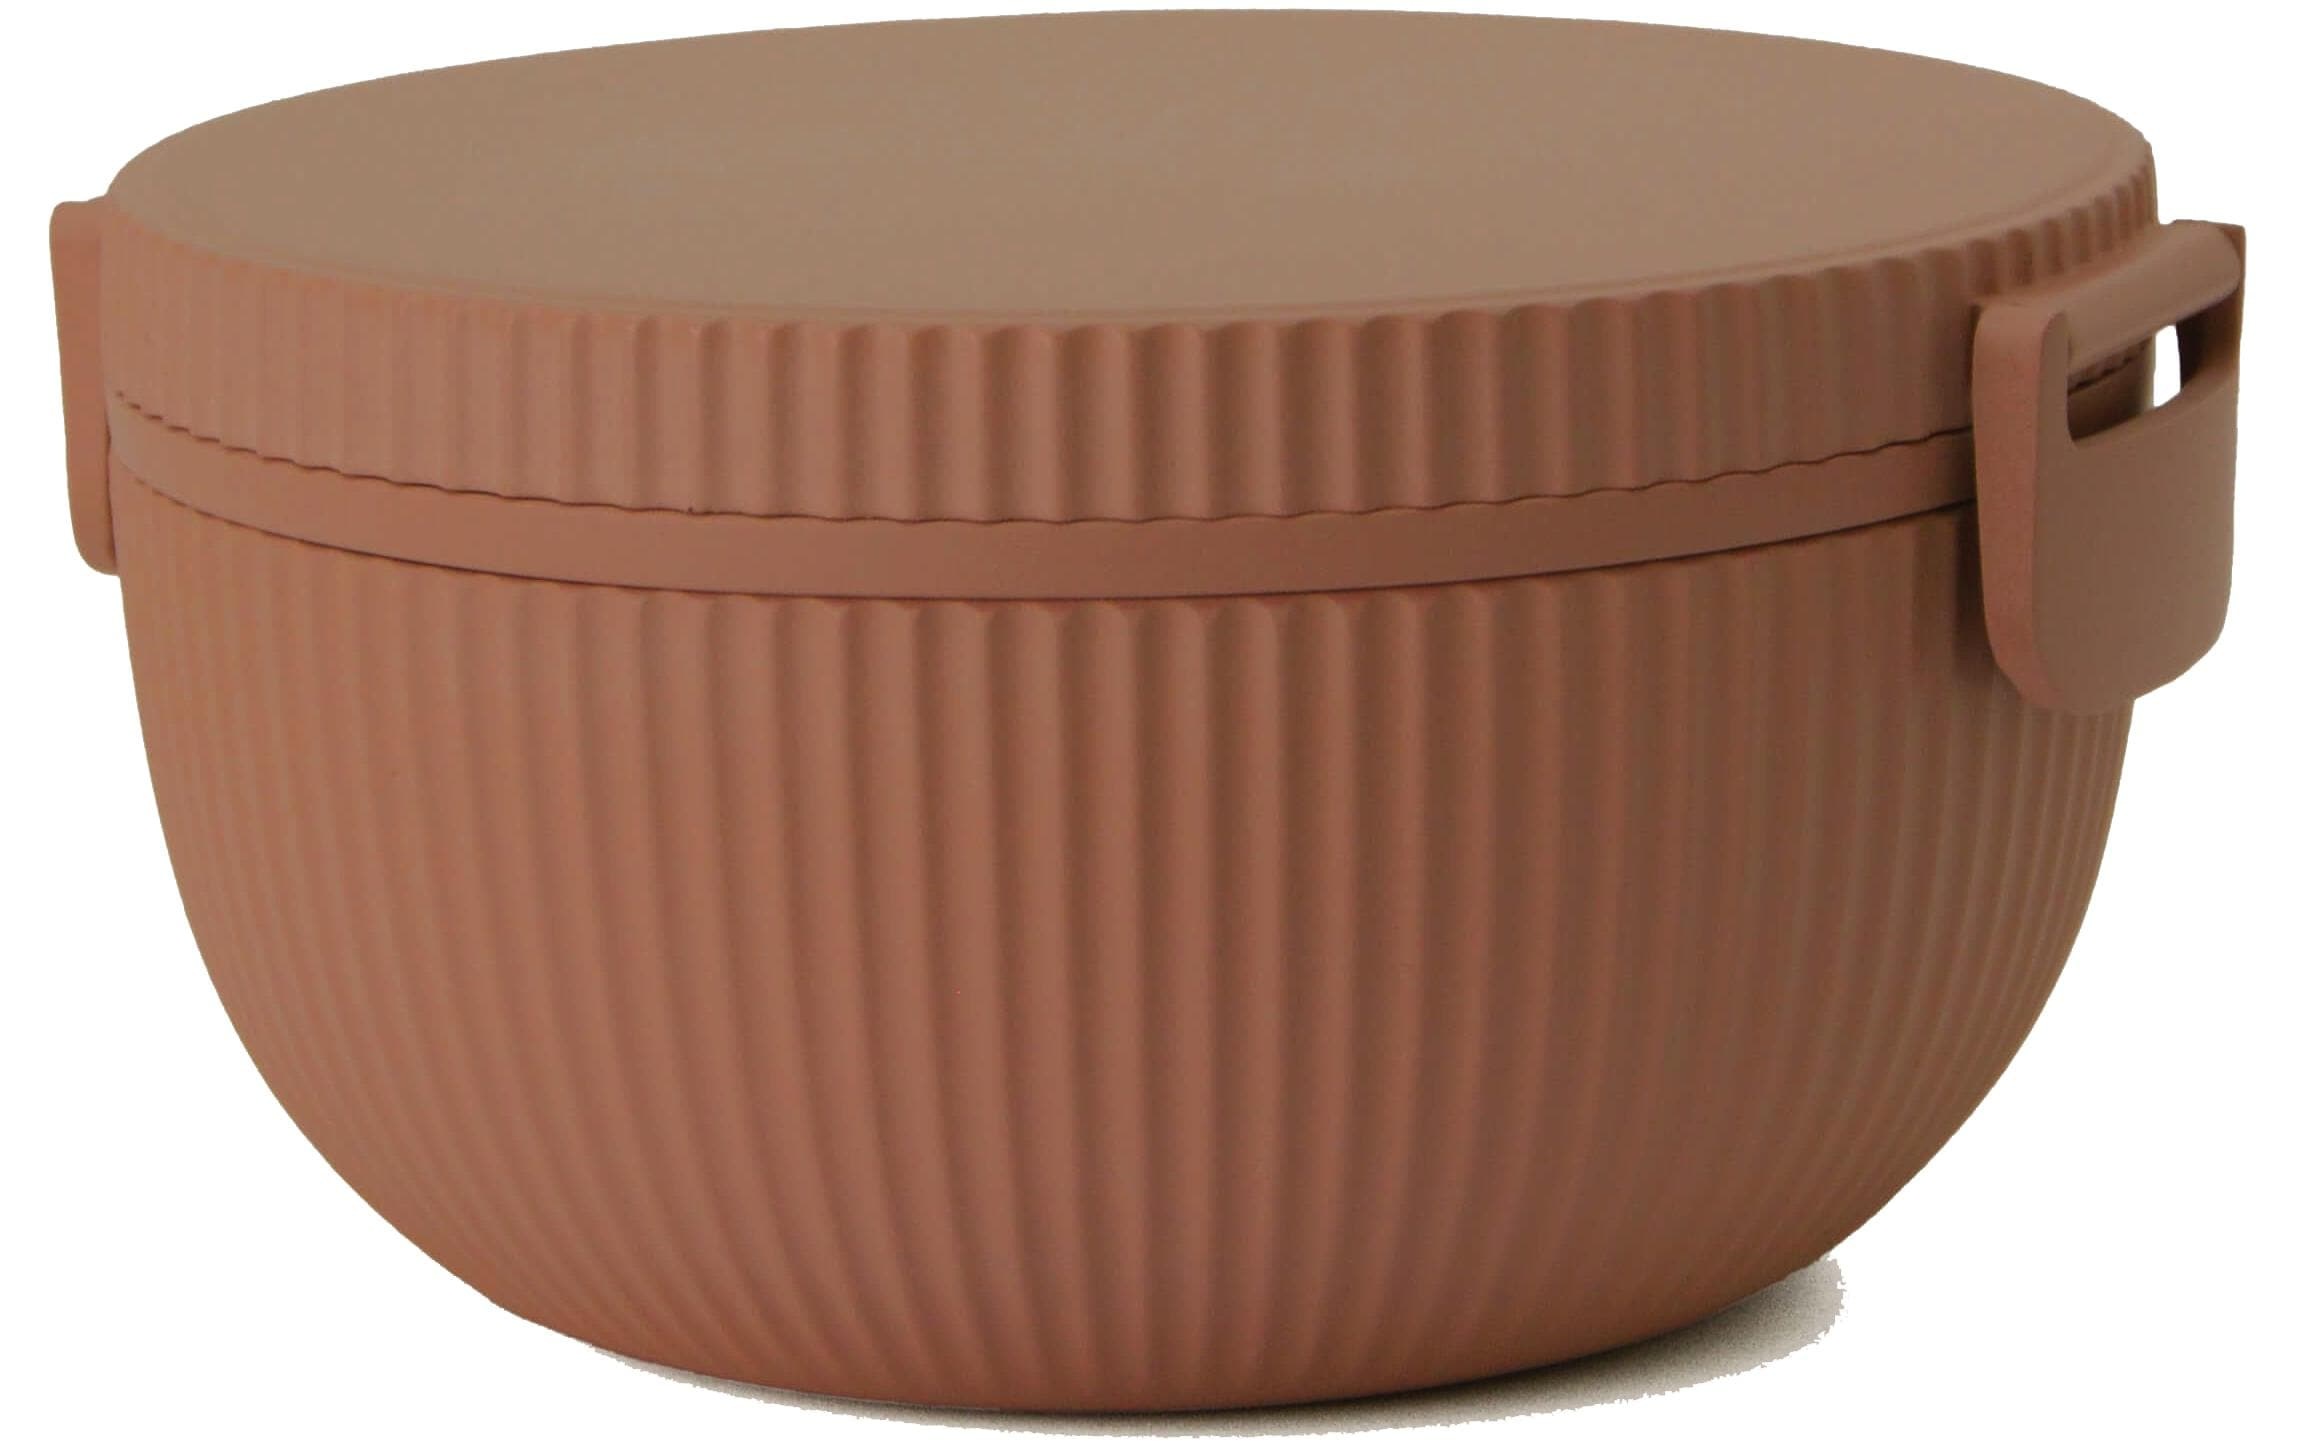 Salatschüssel »bioloco plant deluxe bowl - terracotta«, 1 tlg., aus Kunststoff